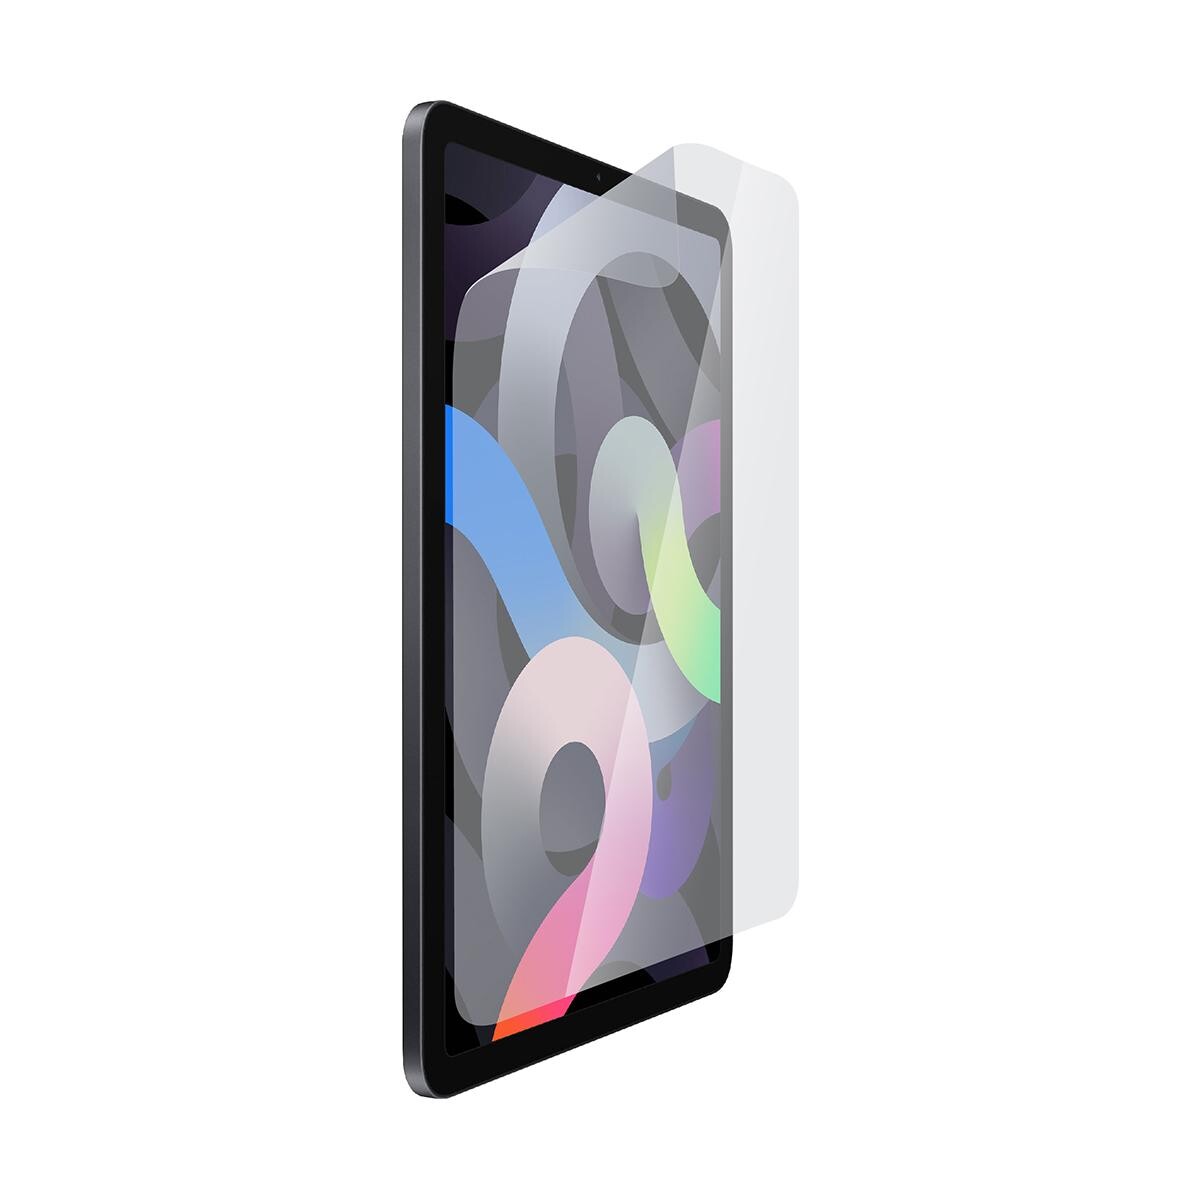 Lámina protectora de pantalla para tablet hasta 11' hidrogel devia - Transparente 